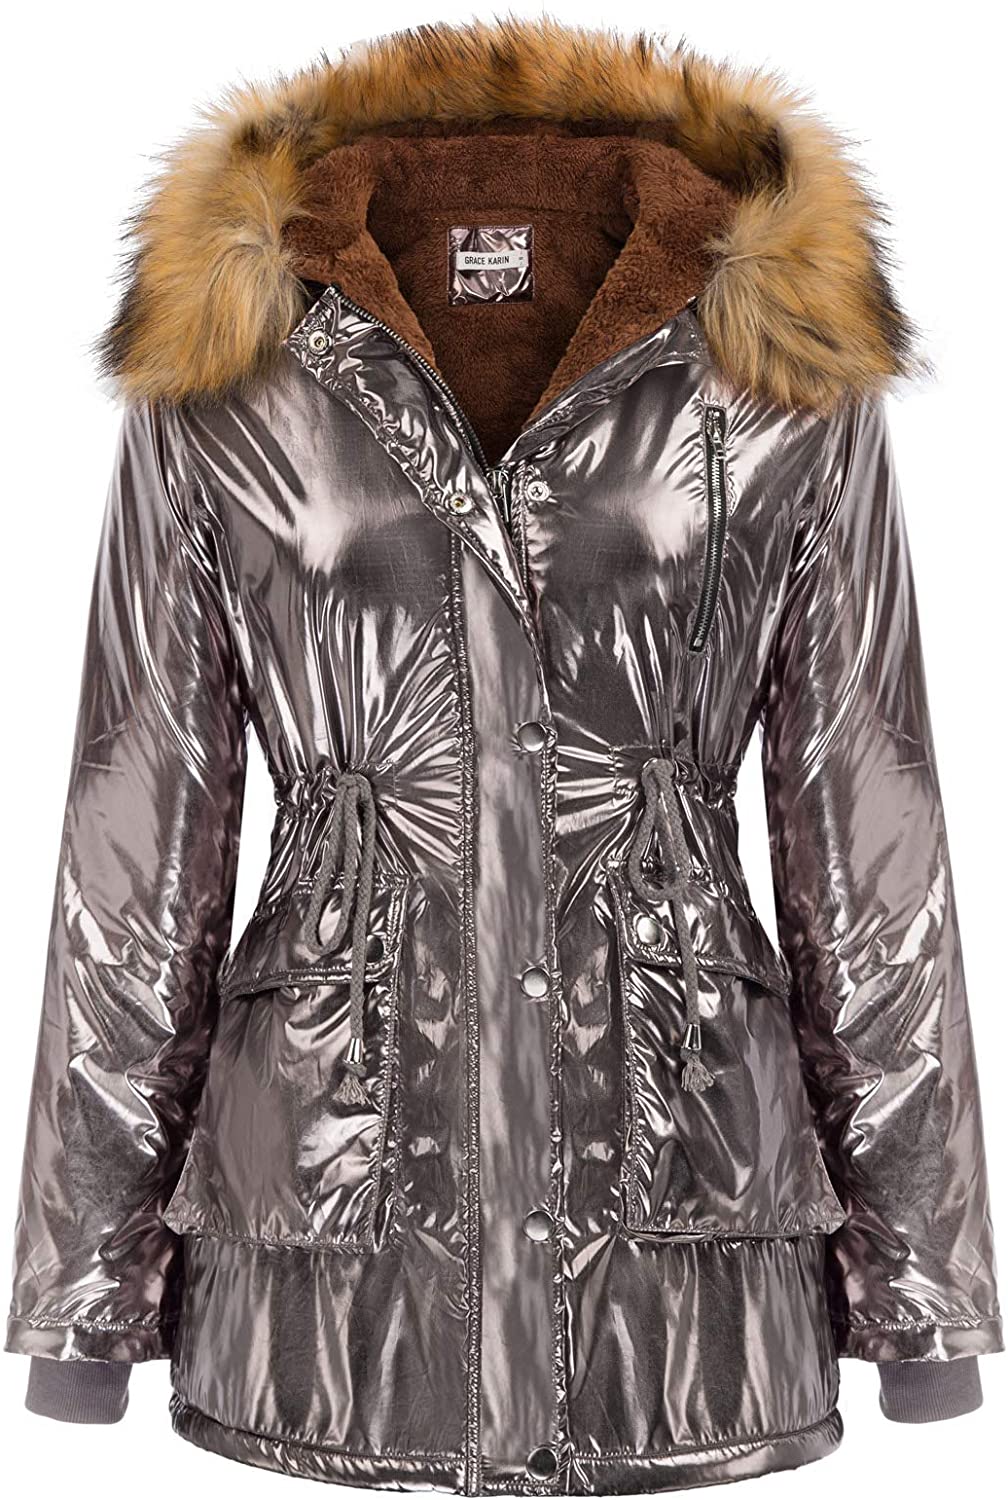 GRACE KARIN Womens Hooded Fleece Line Coats Parkas Faux Fur Jackets with Pockets 